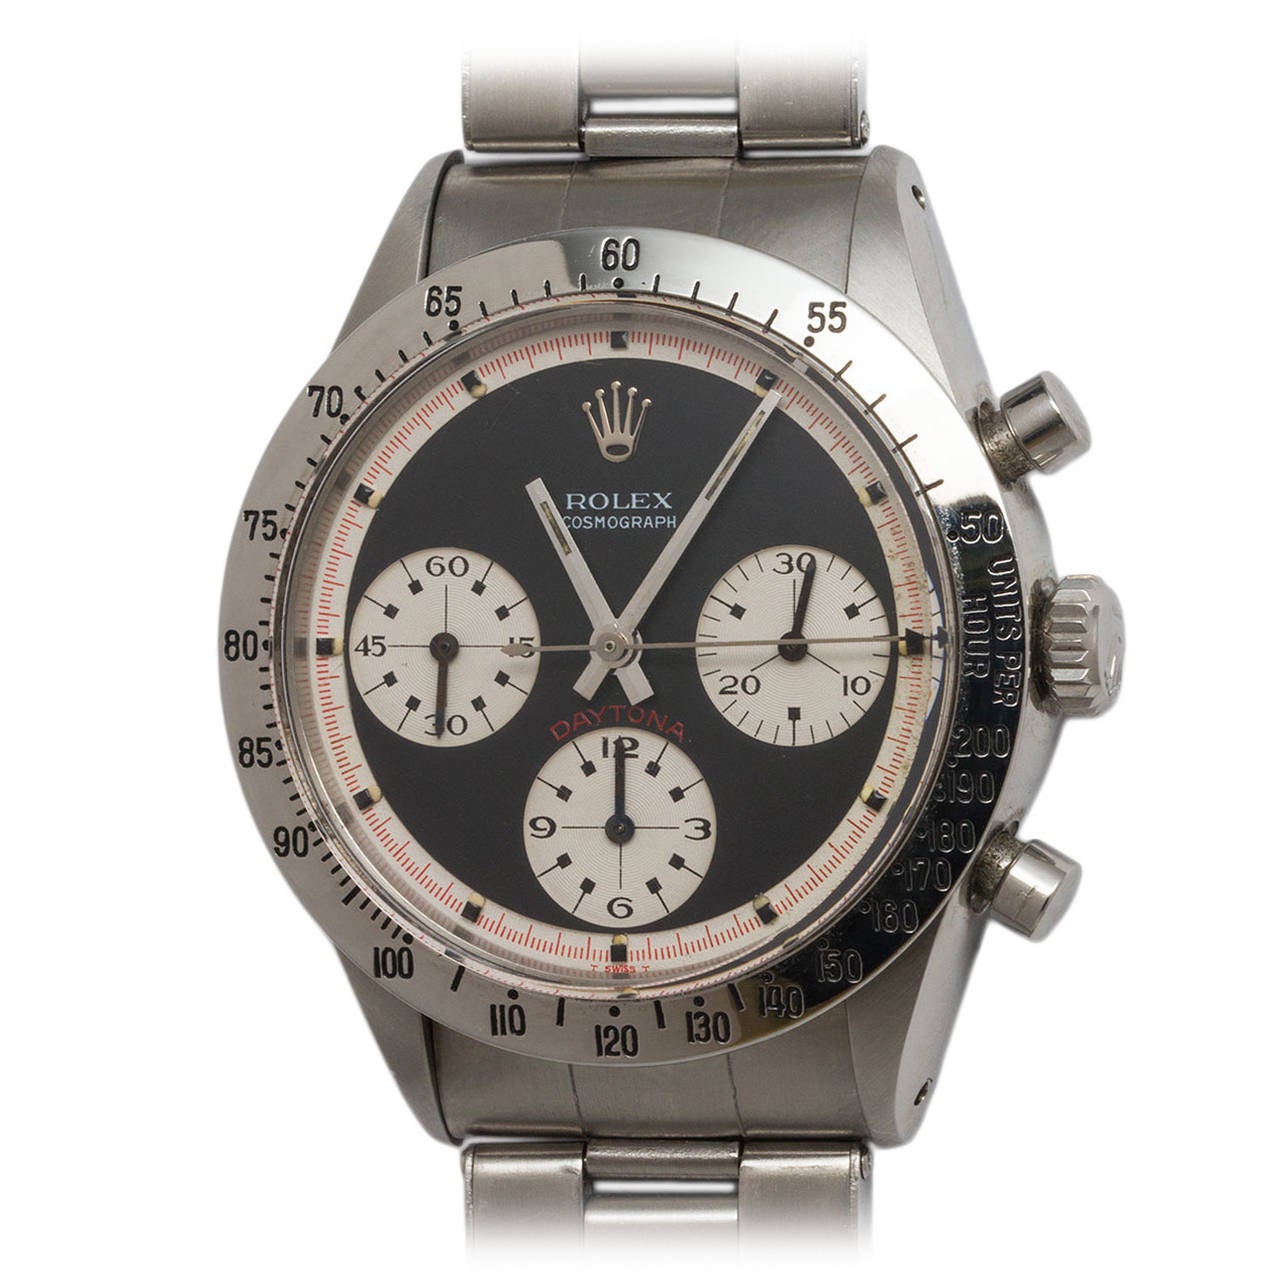 Rolex Stainless Steel Cosmograph Daytona "Paul Newman" Wristwatch Ref 6239